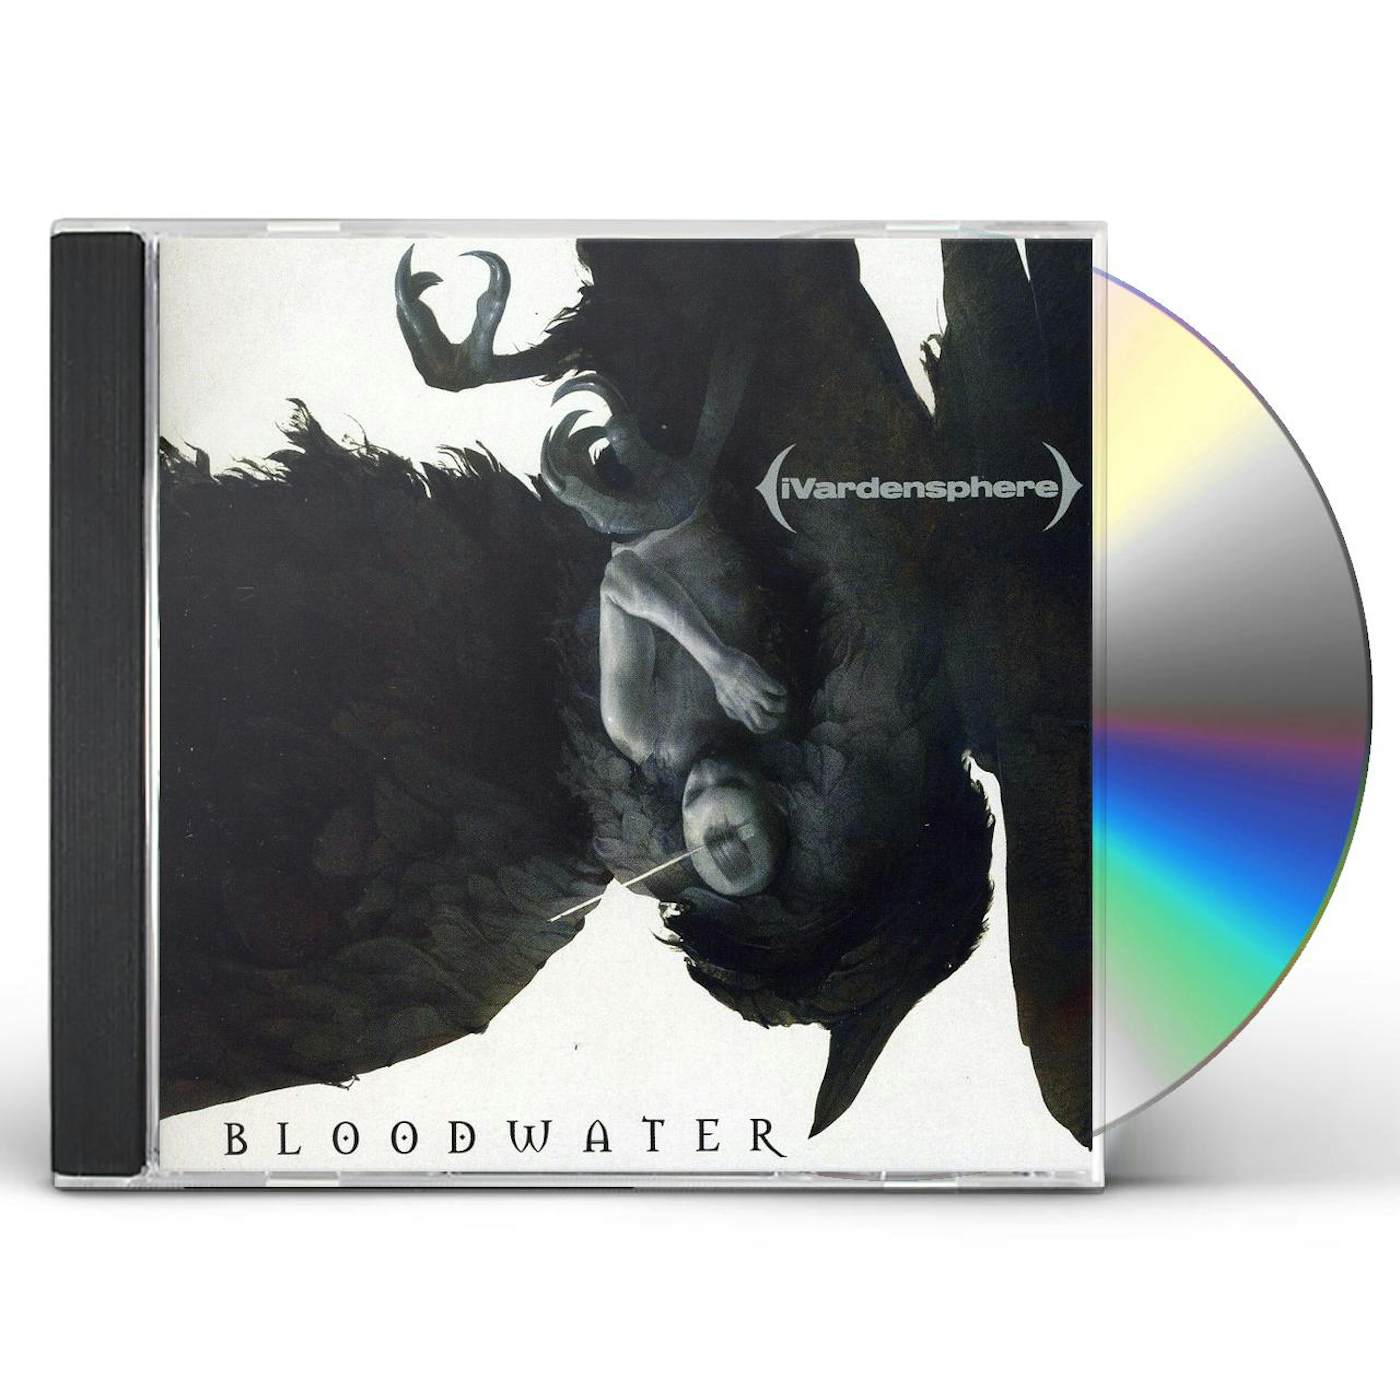 iVardensphere BLOODWATER CD